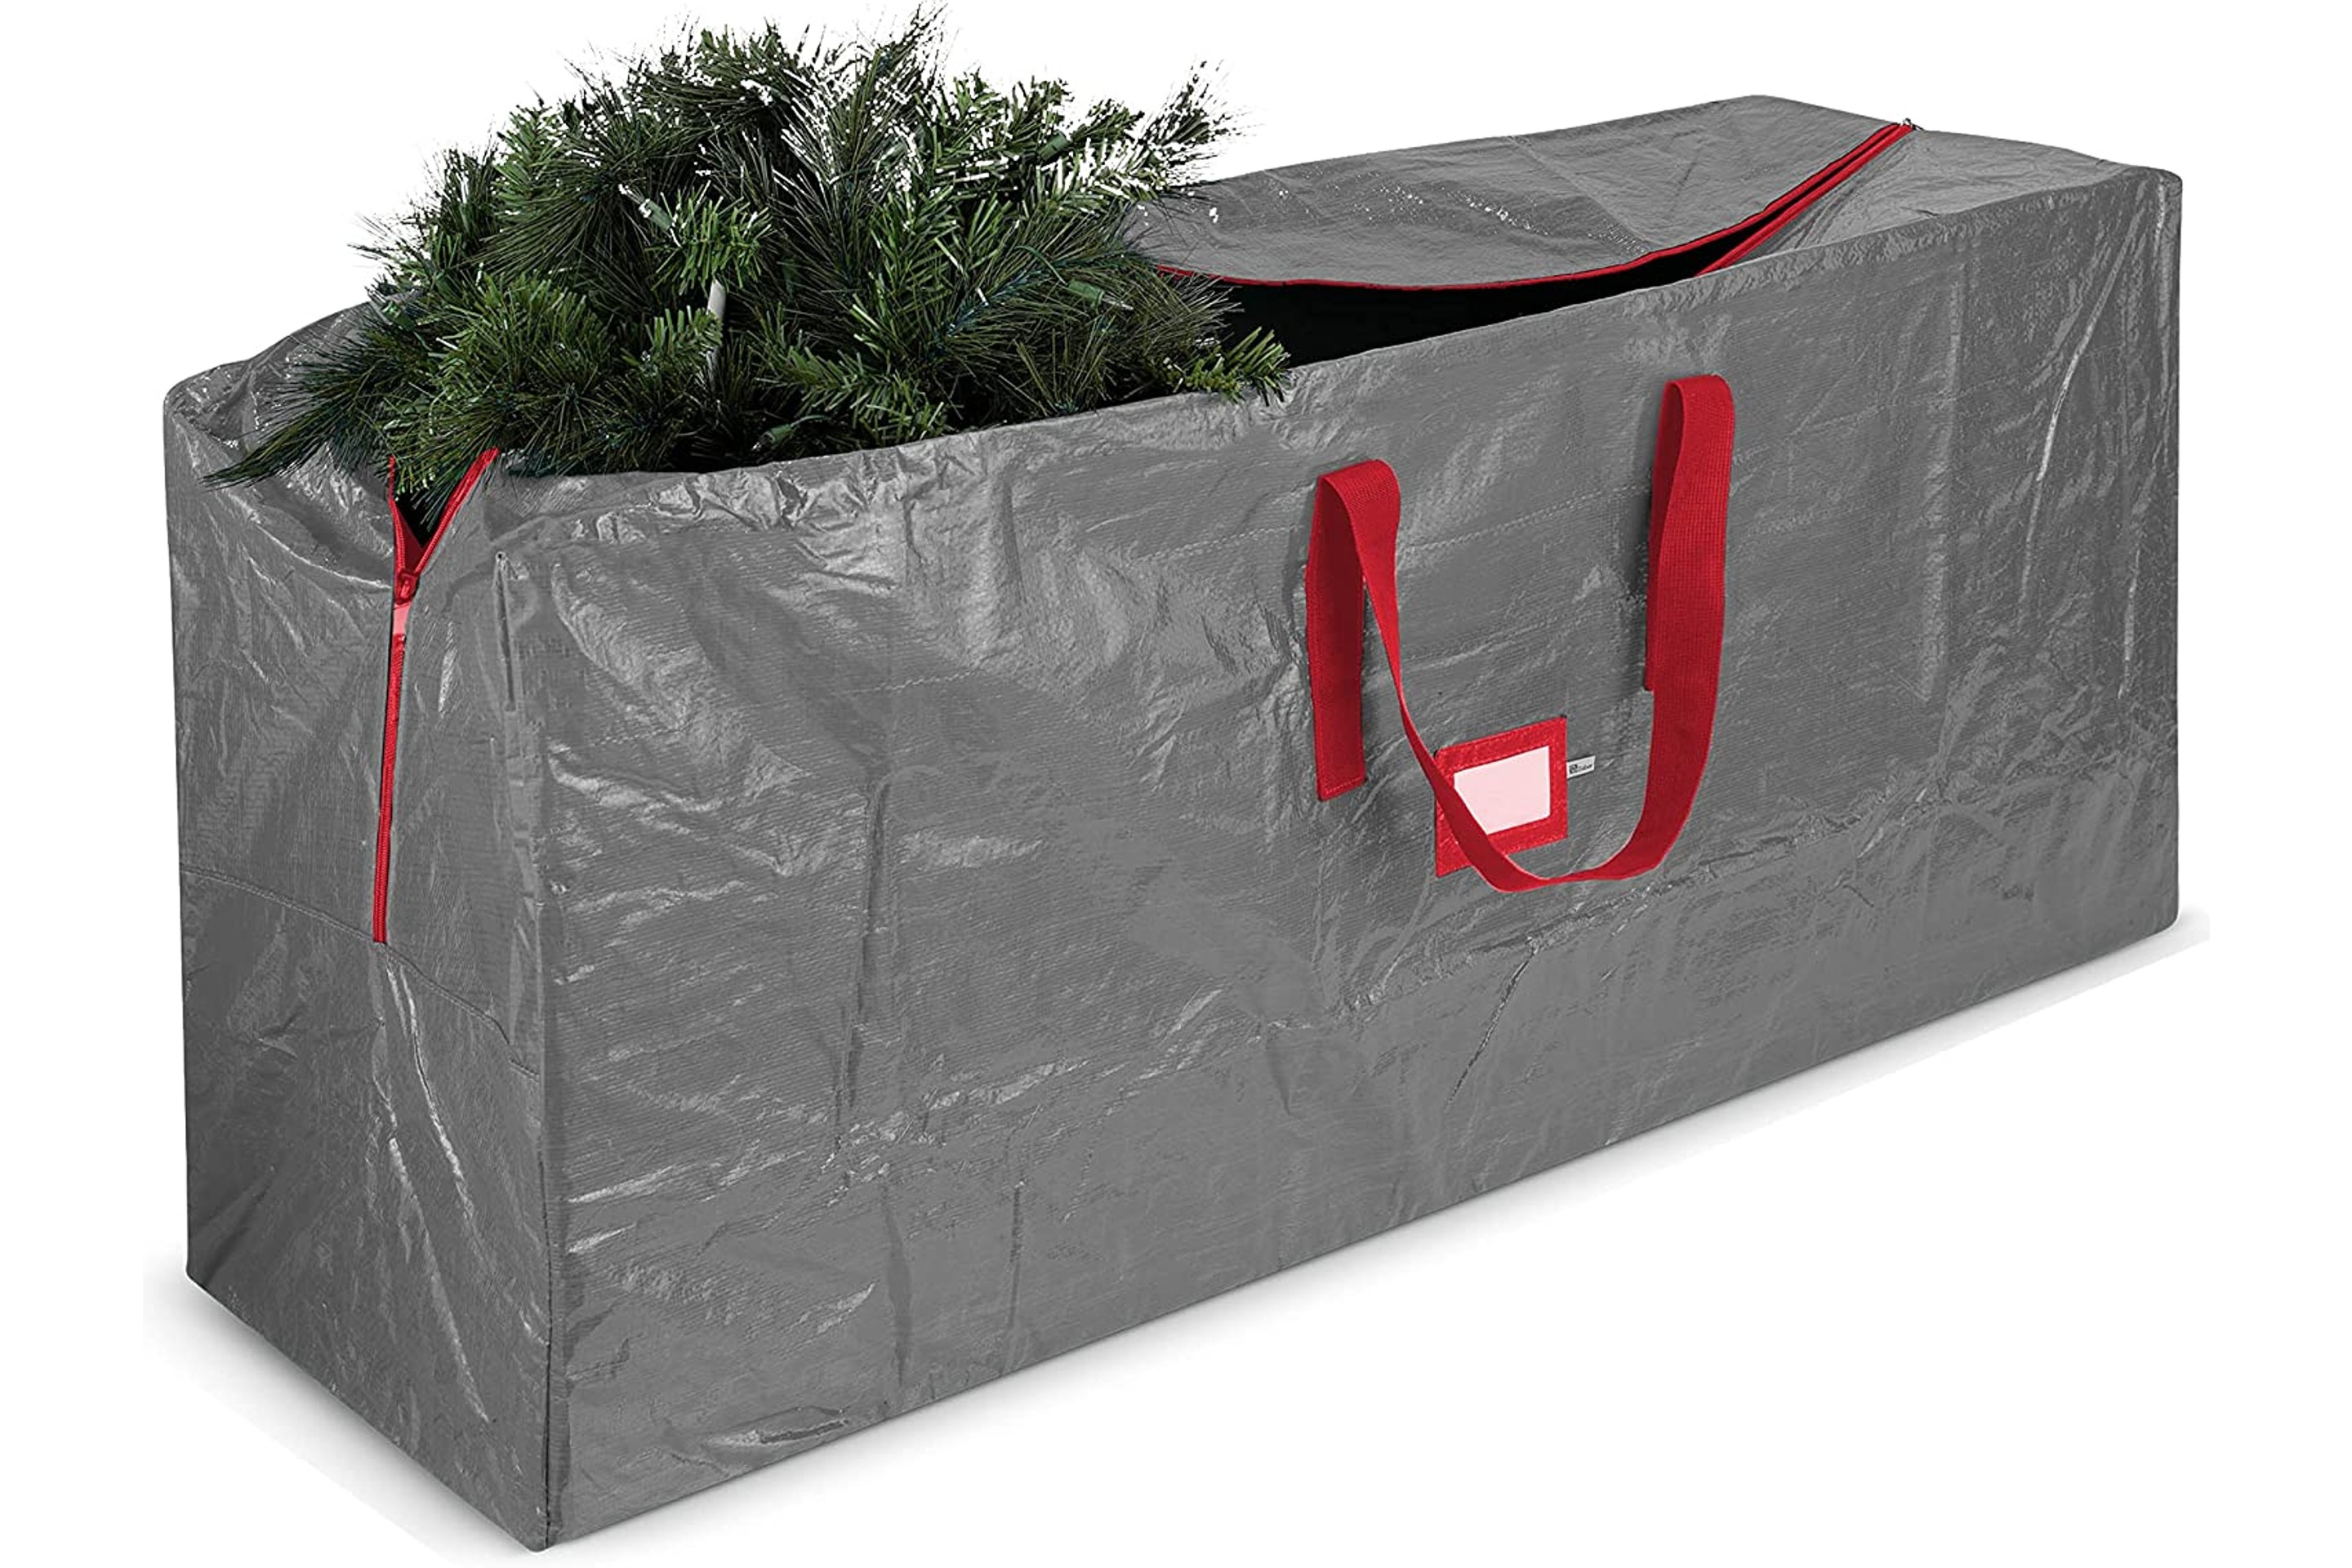 Large Christmas Tree Storage Bag